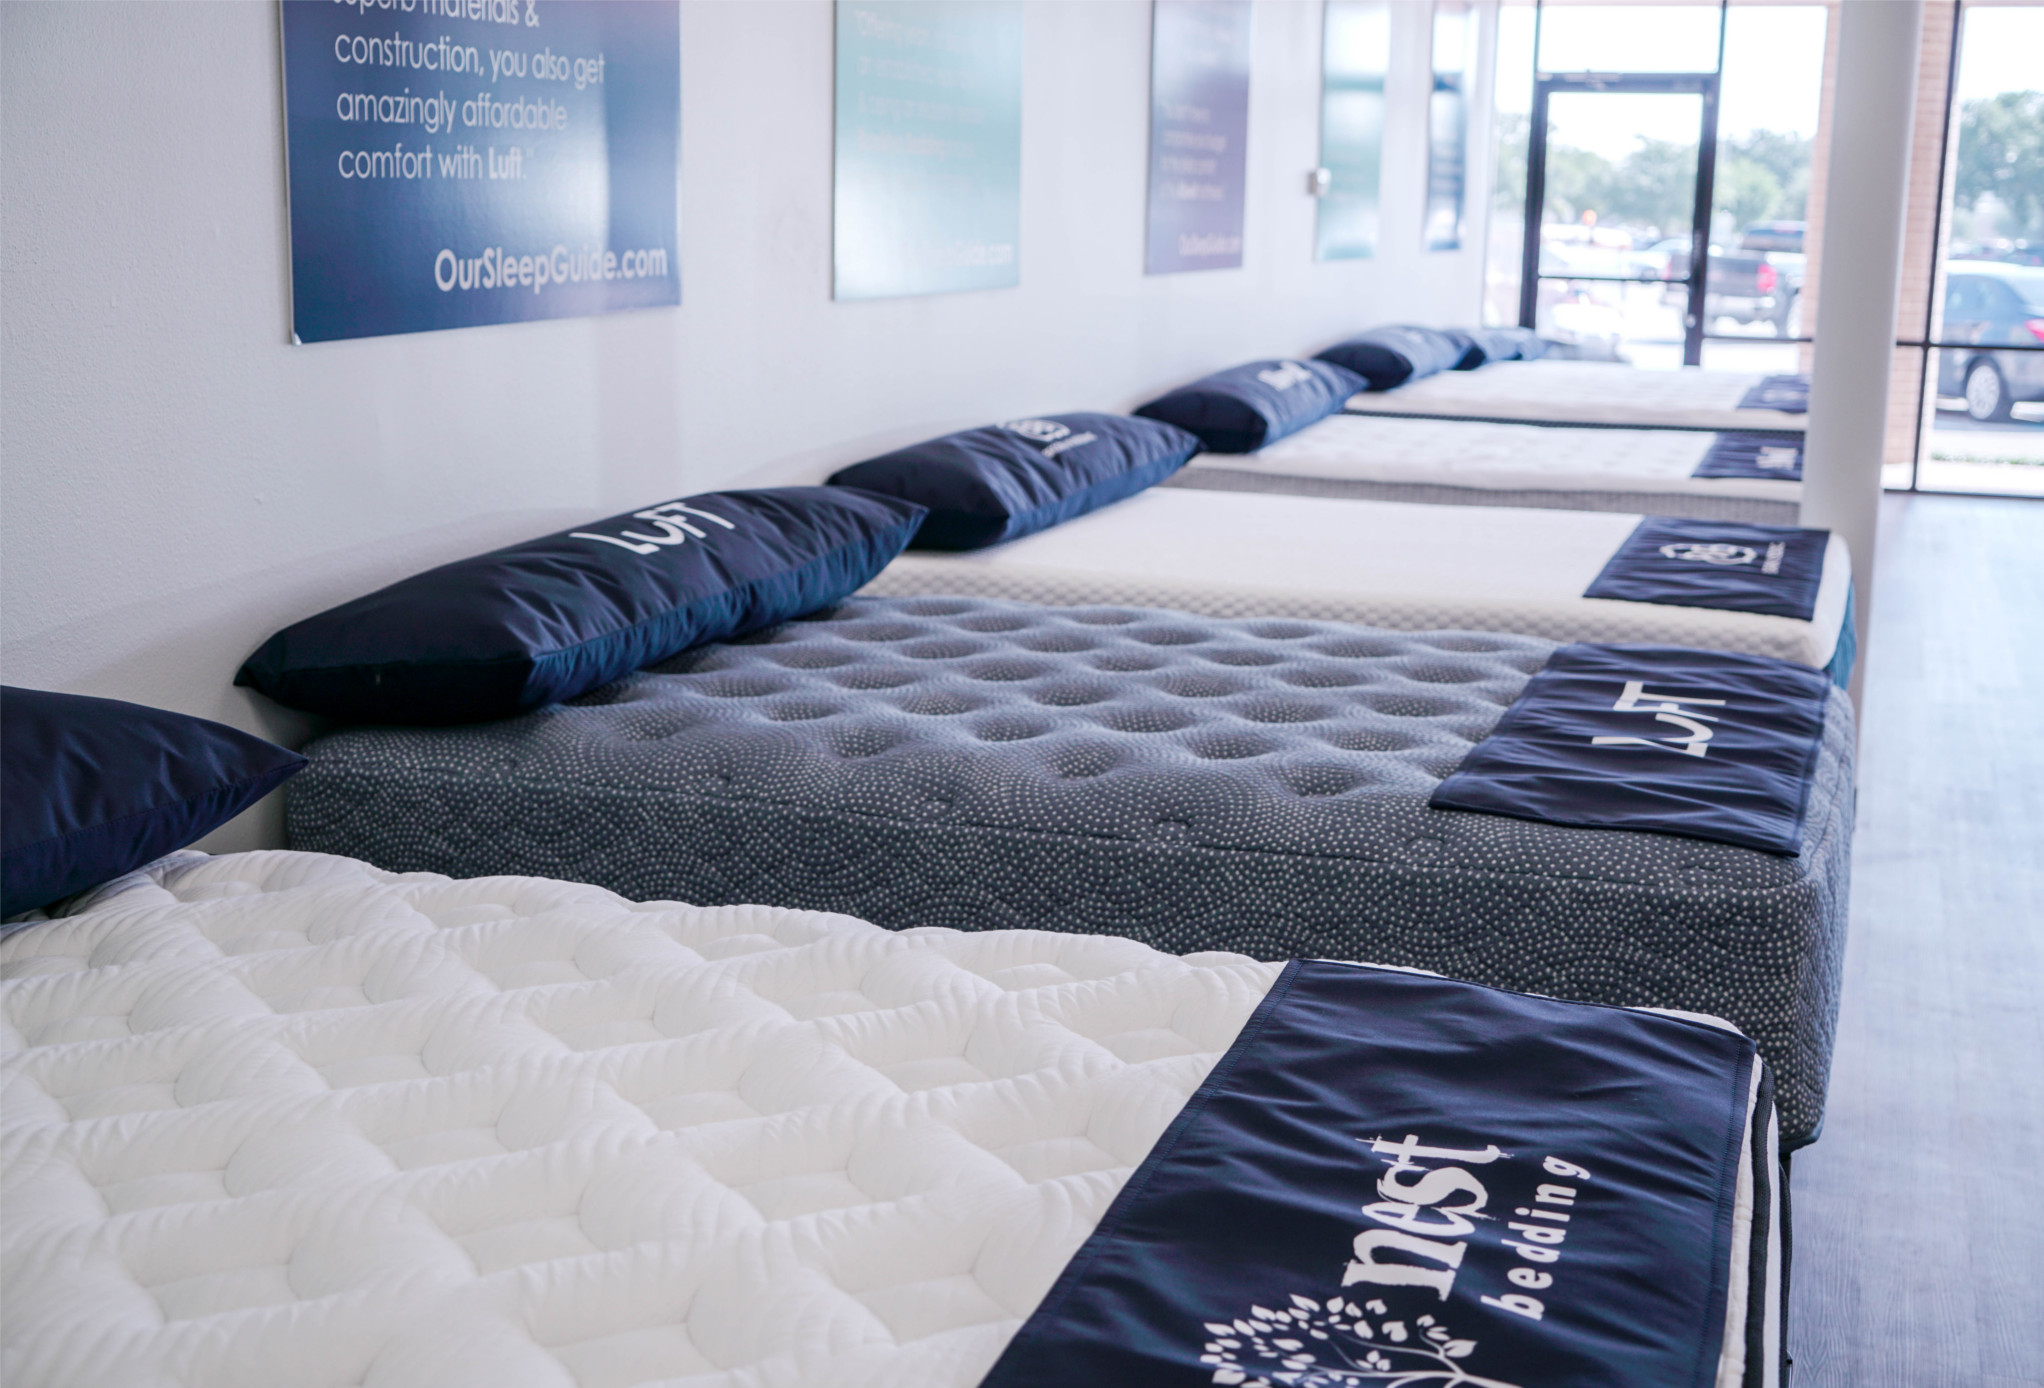 sleep sherpa online mattress showroom edina